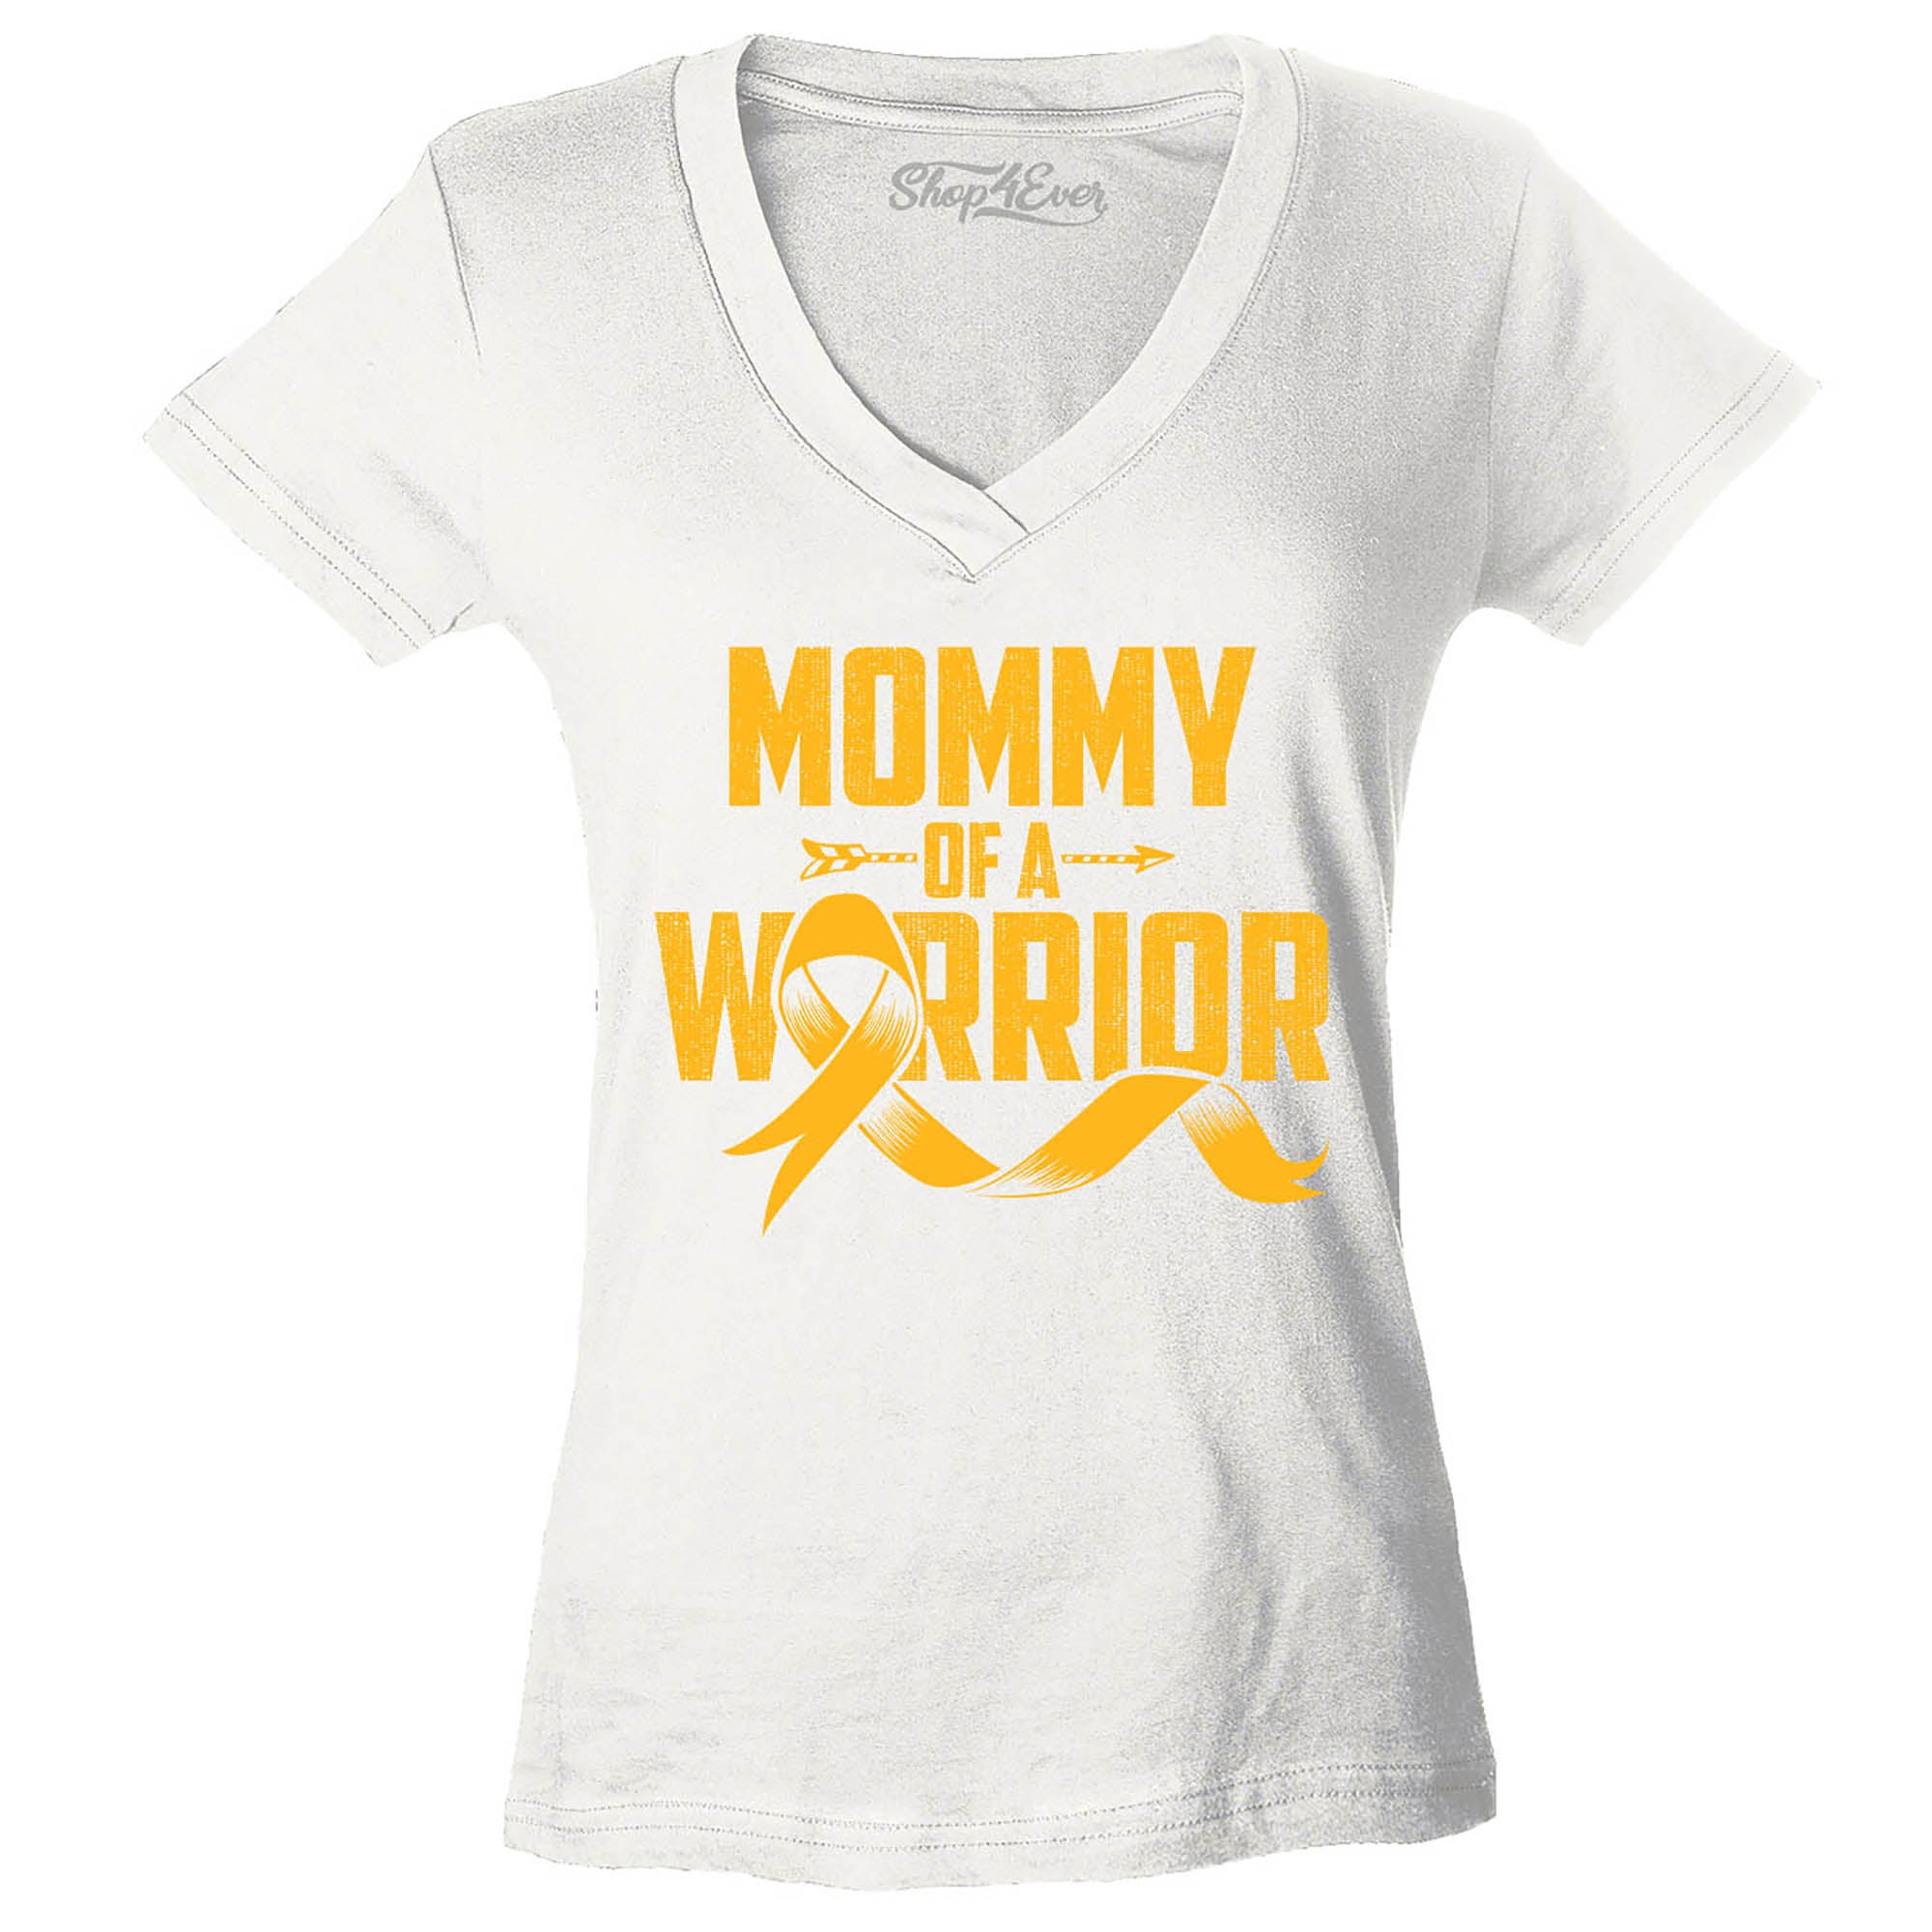 Mommy of a Warrior Childhood Cancer Awareness Women's V-Neck T-Shirt Slim Fit